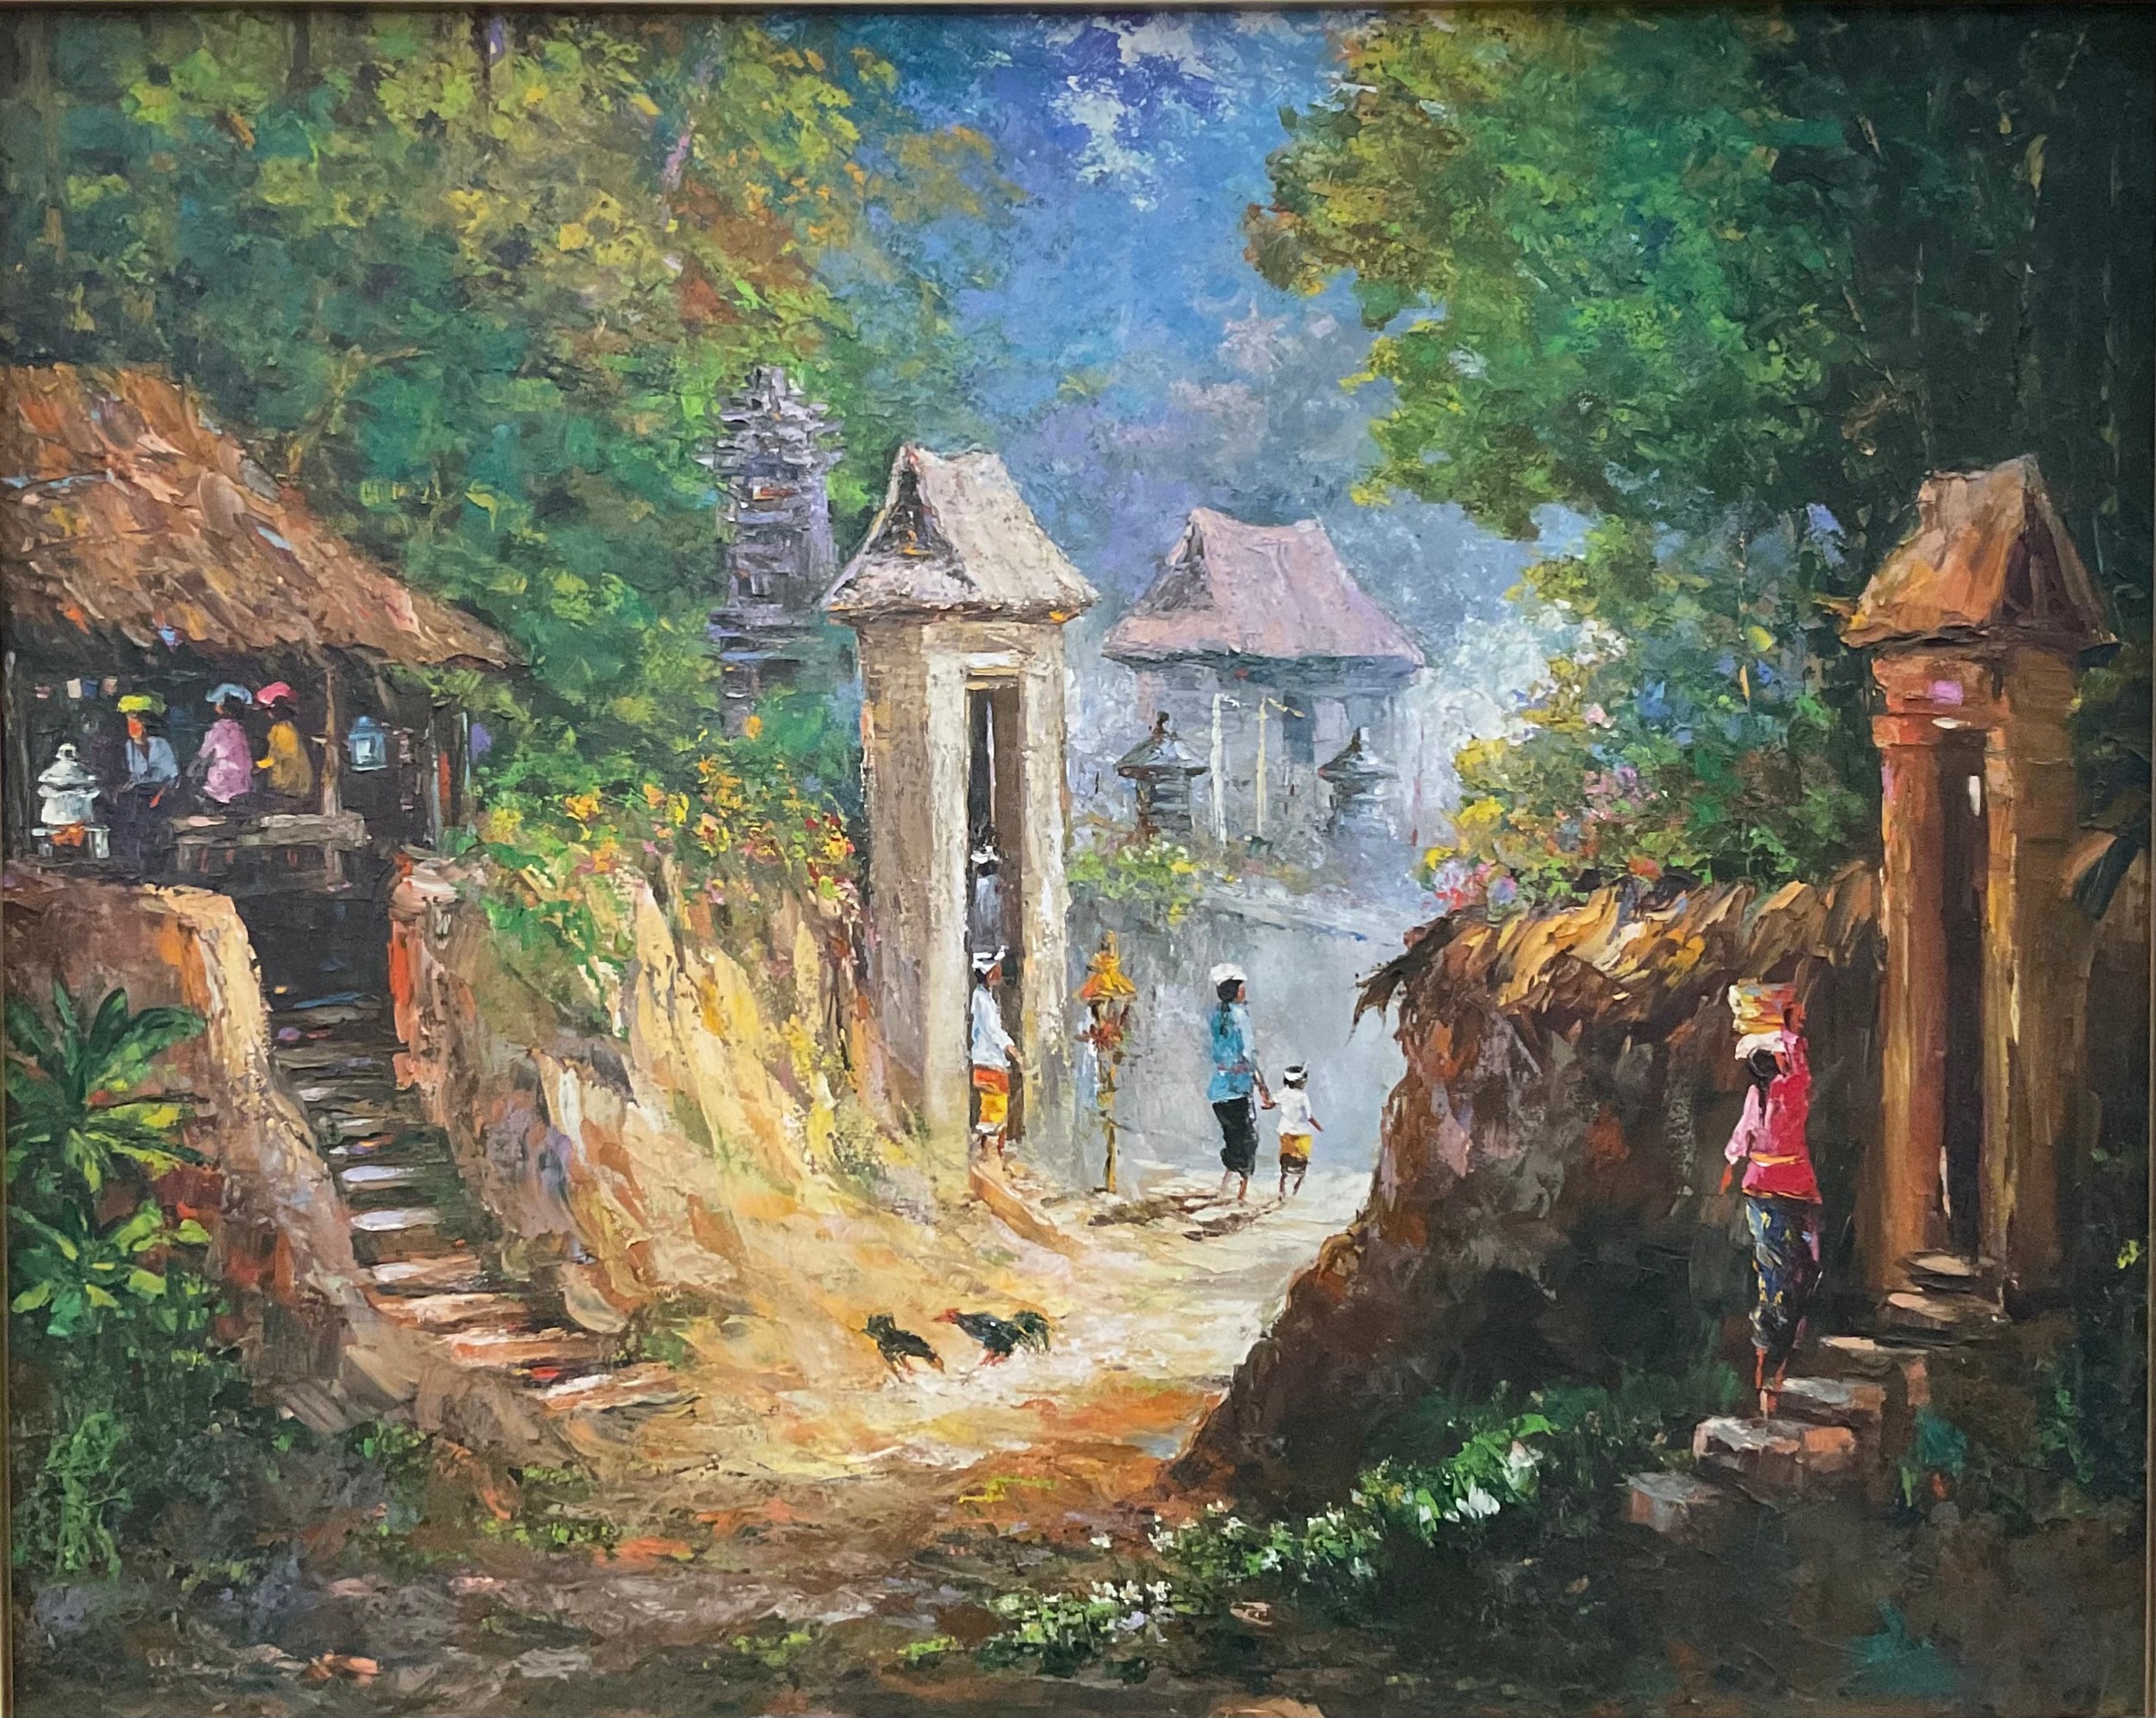 Dioko Sutrisno Bali Village oil on canvas, 150cm x 120cm